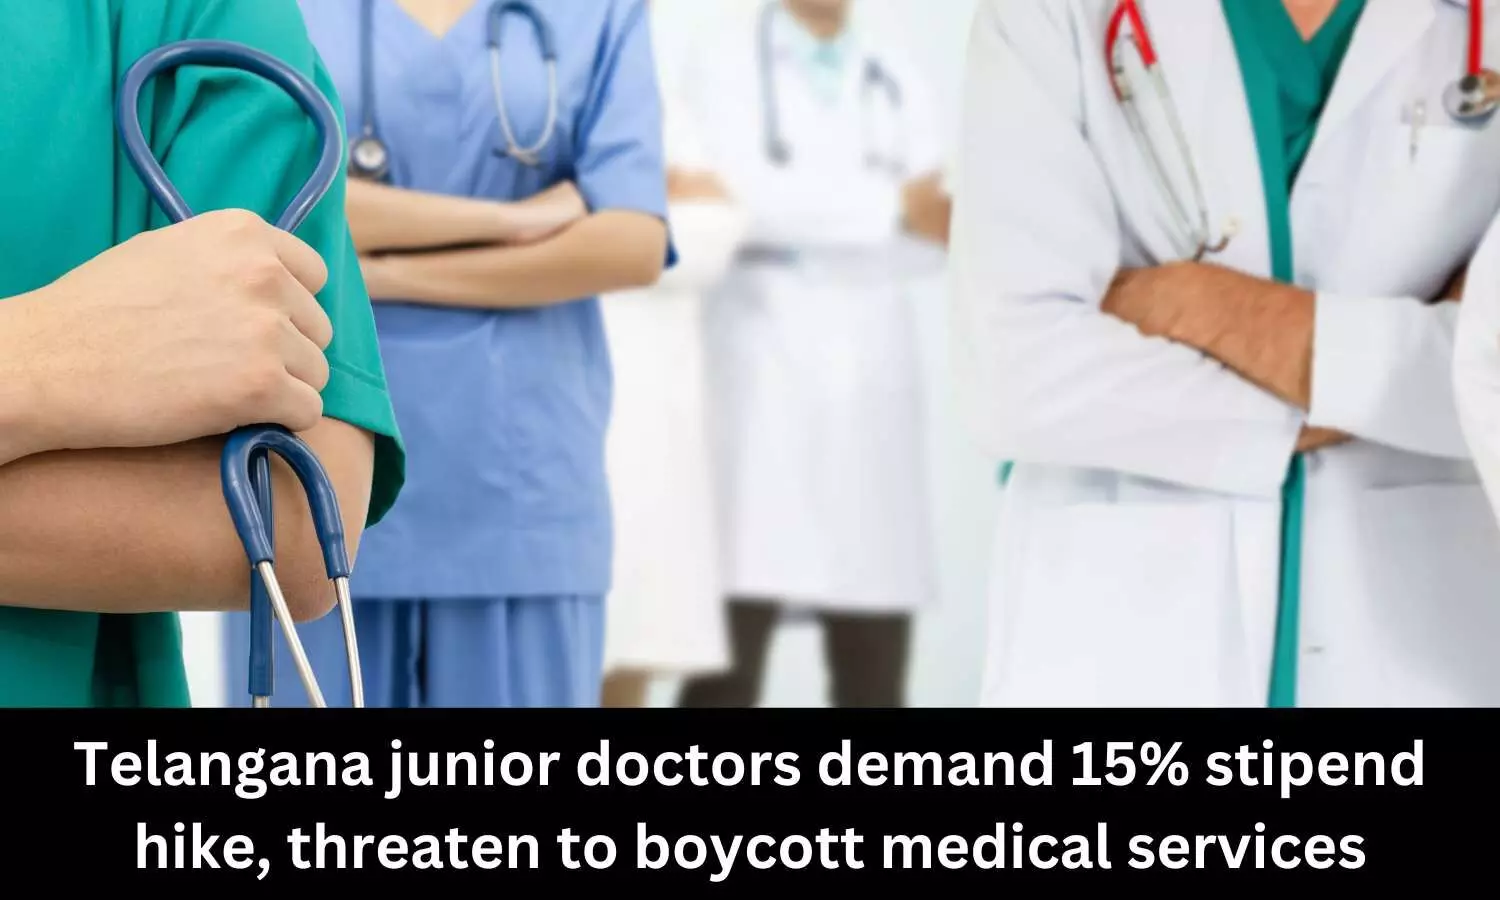 Junior doctors in Telangana demand stipend hike, threaten to boycott medical services